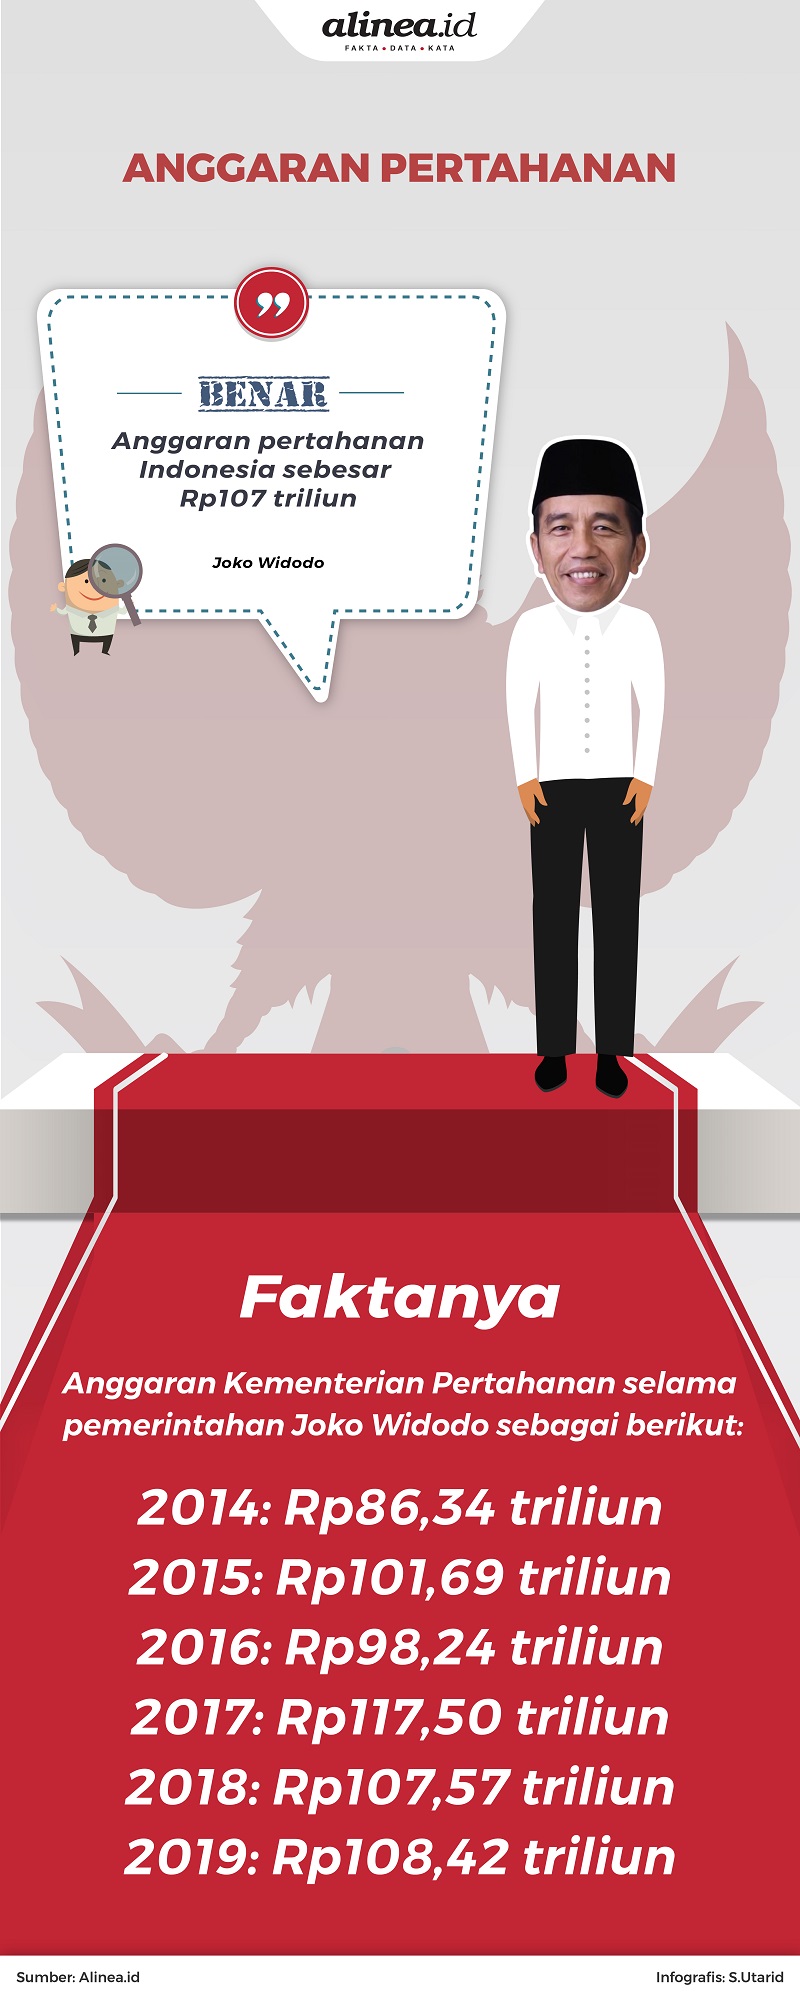 Cek fakta: Anggaran pertahanan Indonesia. Alinea.id.